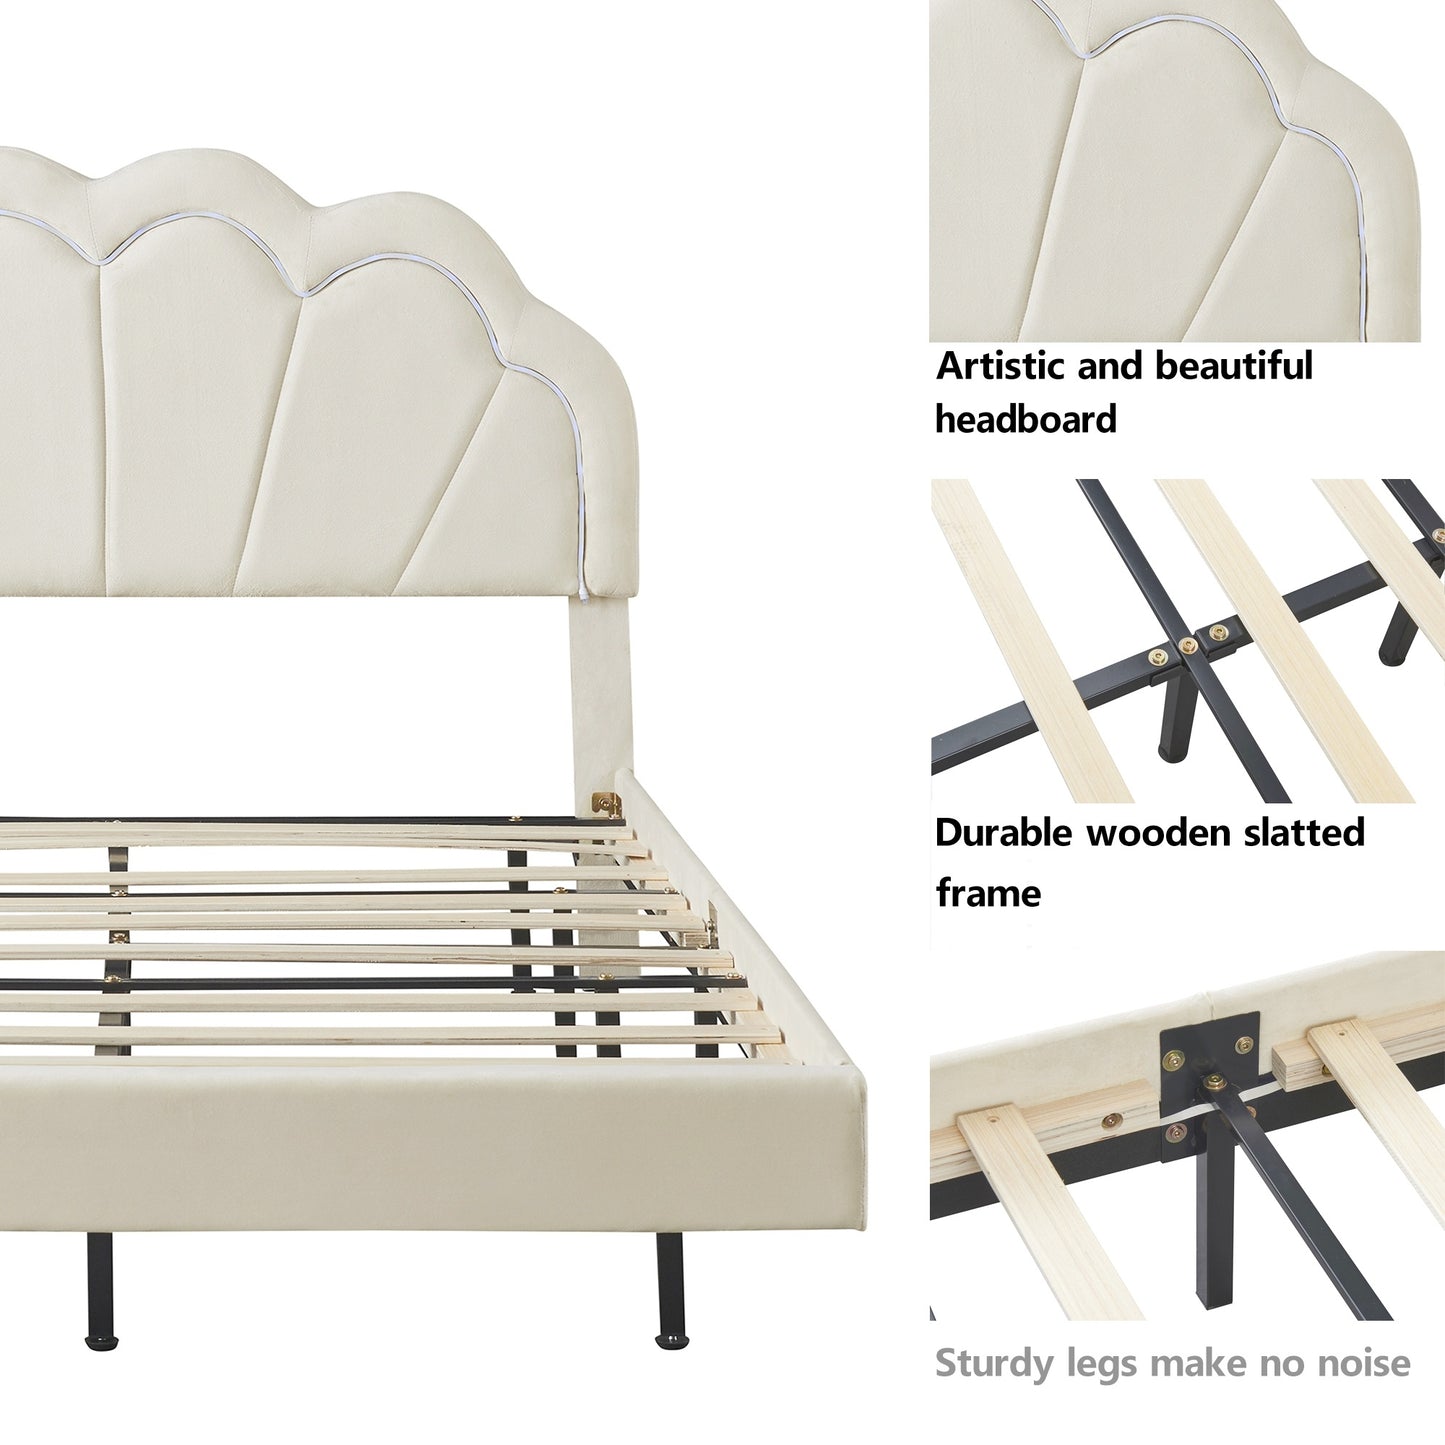 upholstered led platform bed with storage ottoman